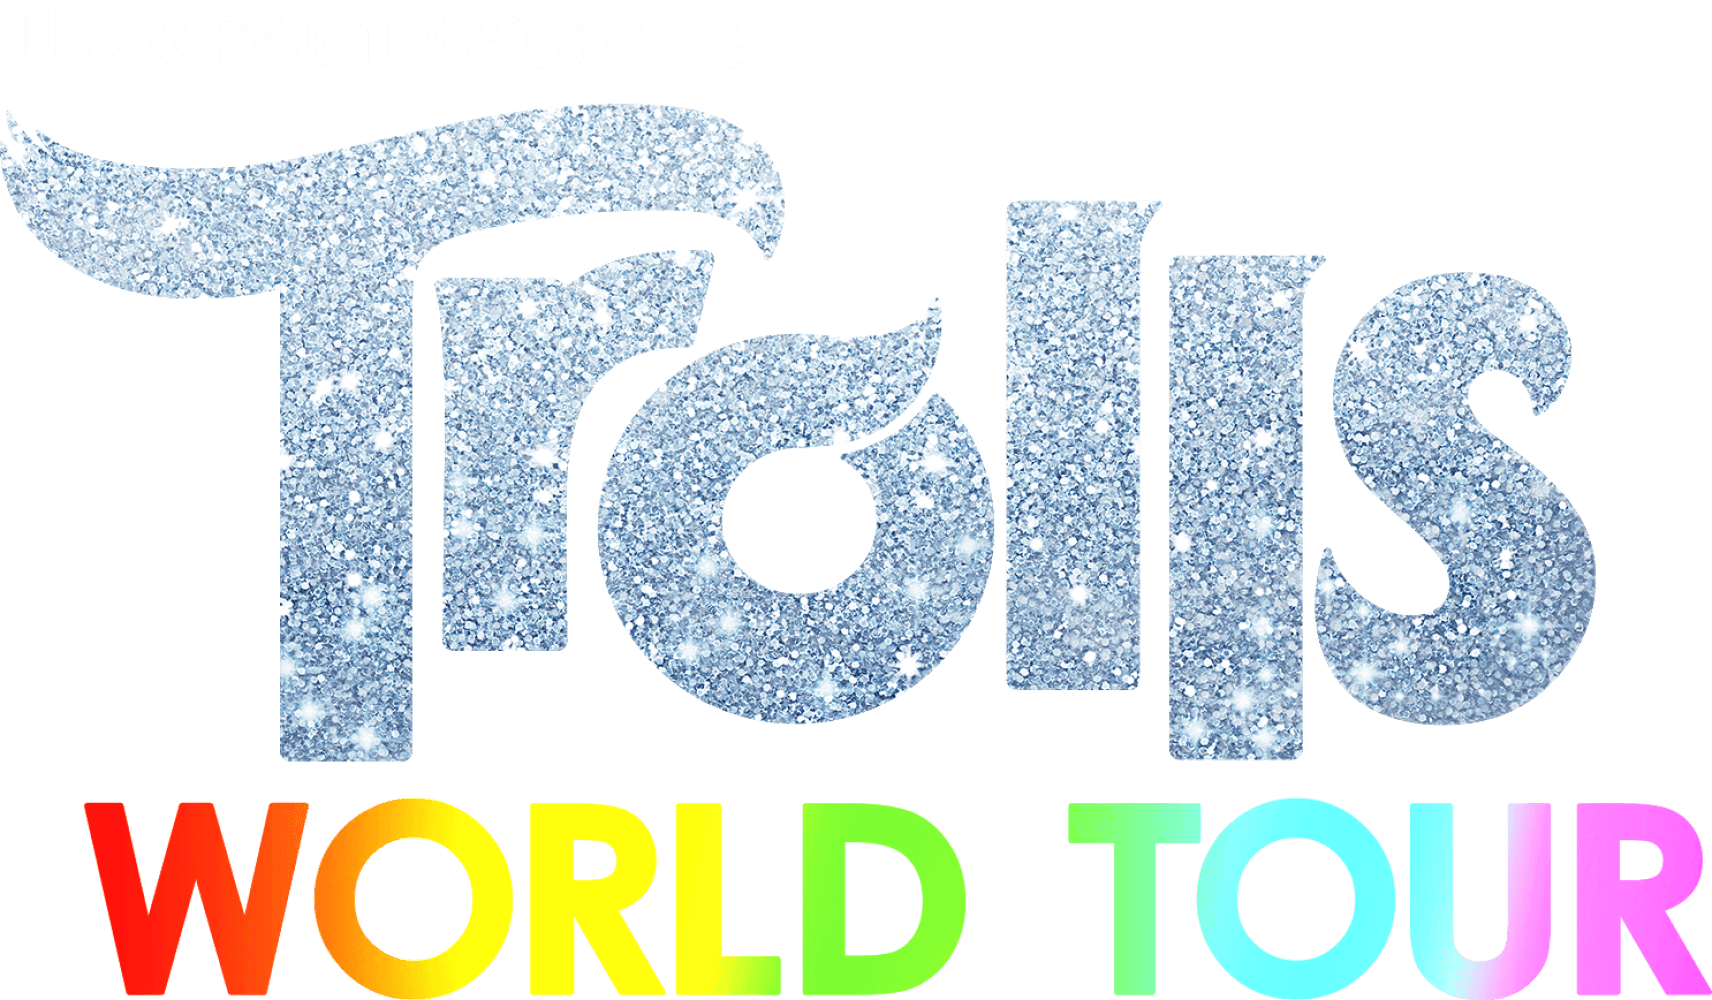 Trolls World Tour logo